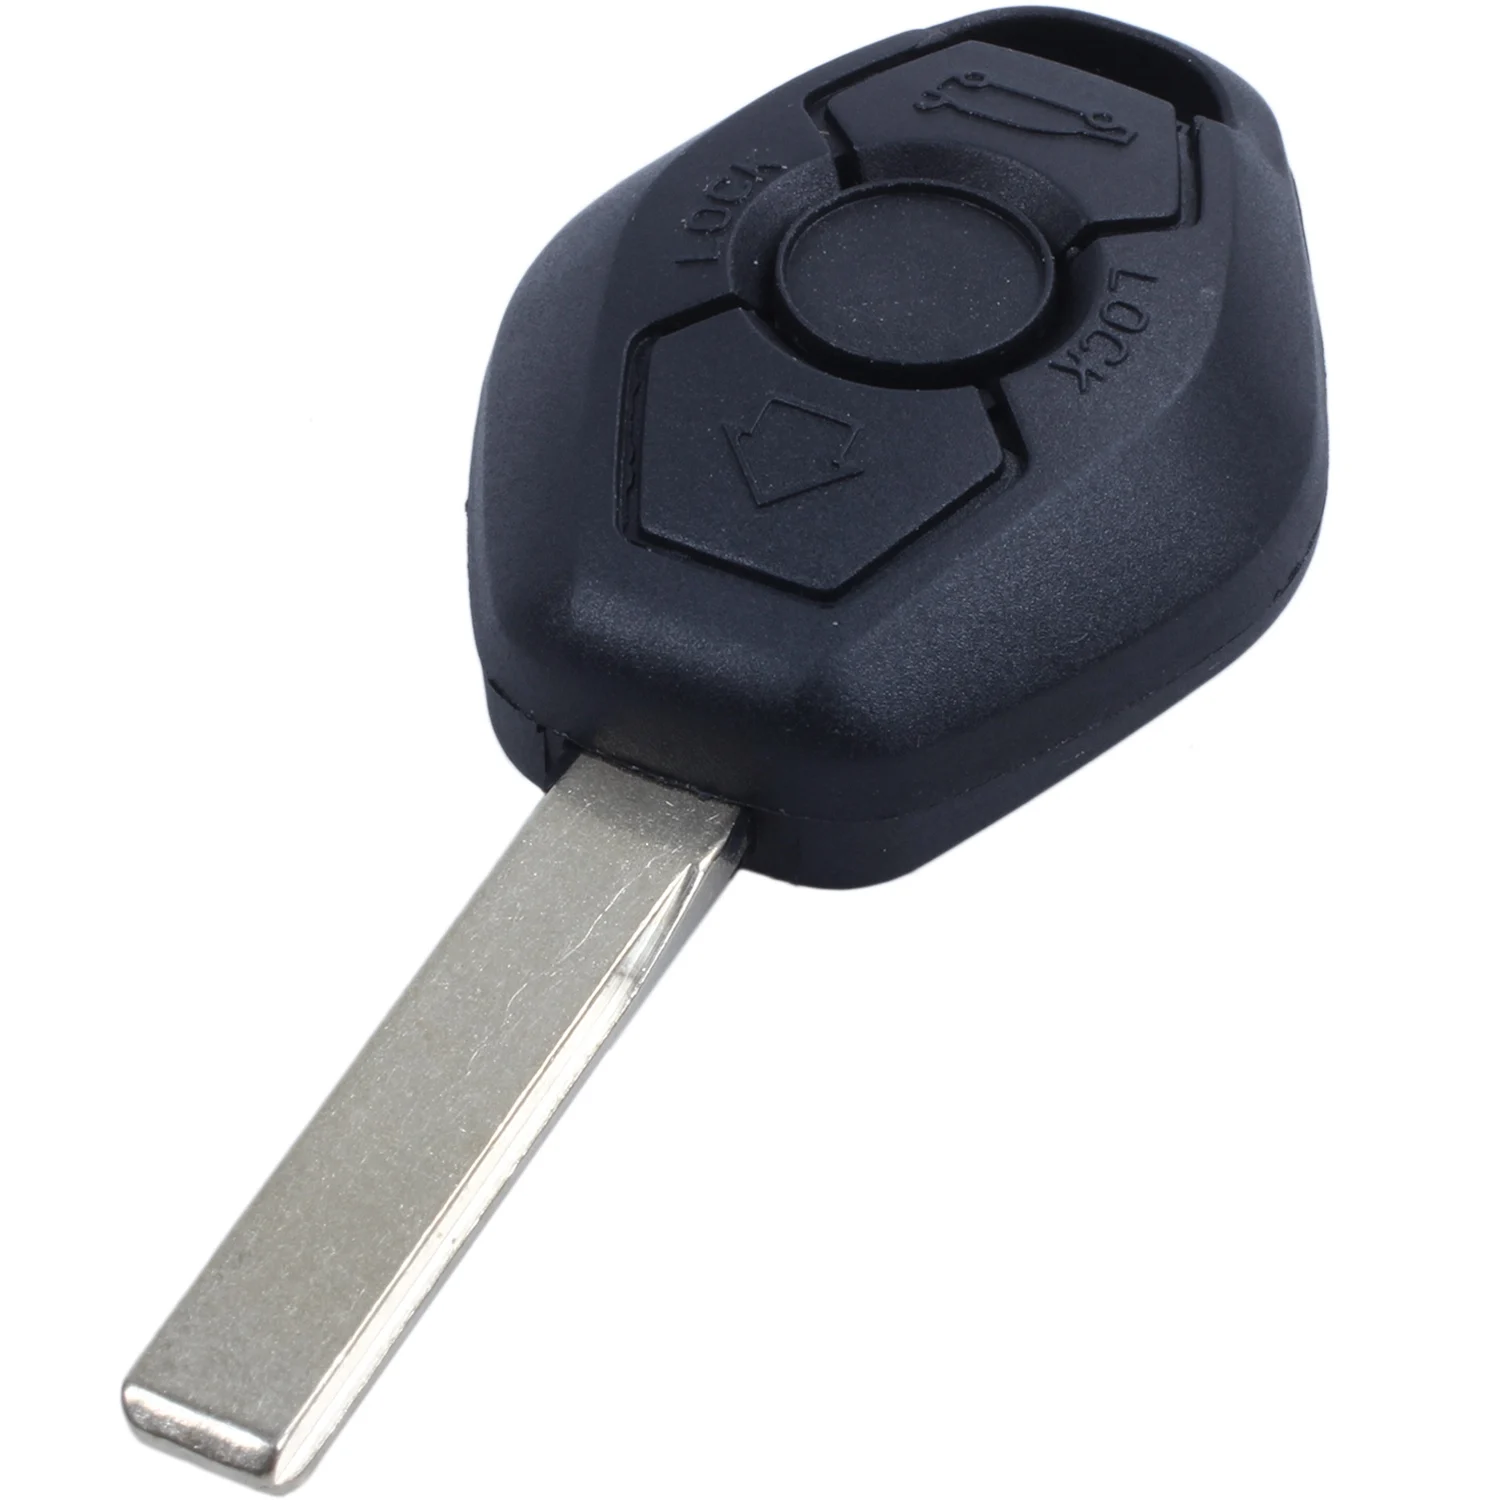 

Remote Key Shell 3 Button 315MHz for E81 E46 E39 E63 E38 E83 E53 E36 E85